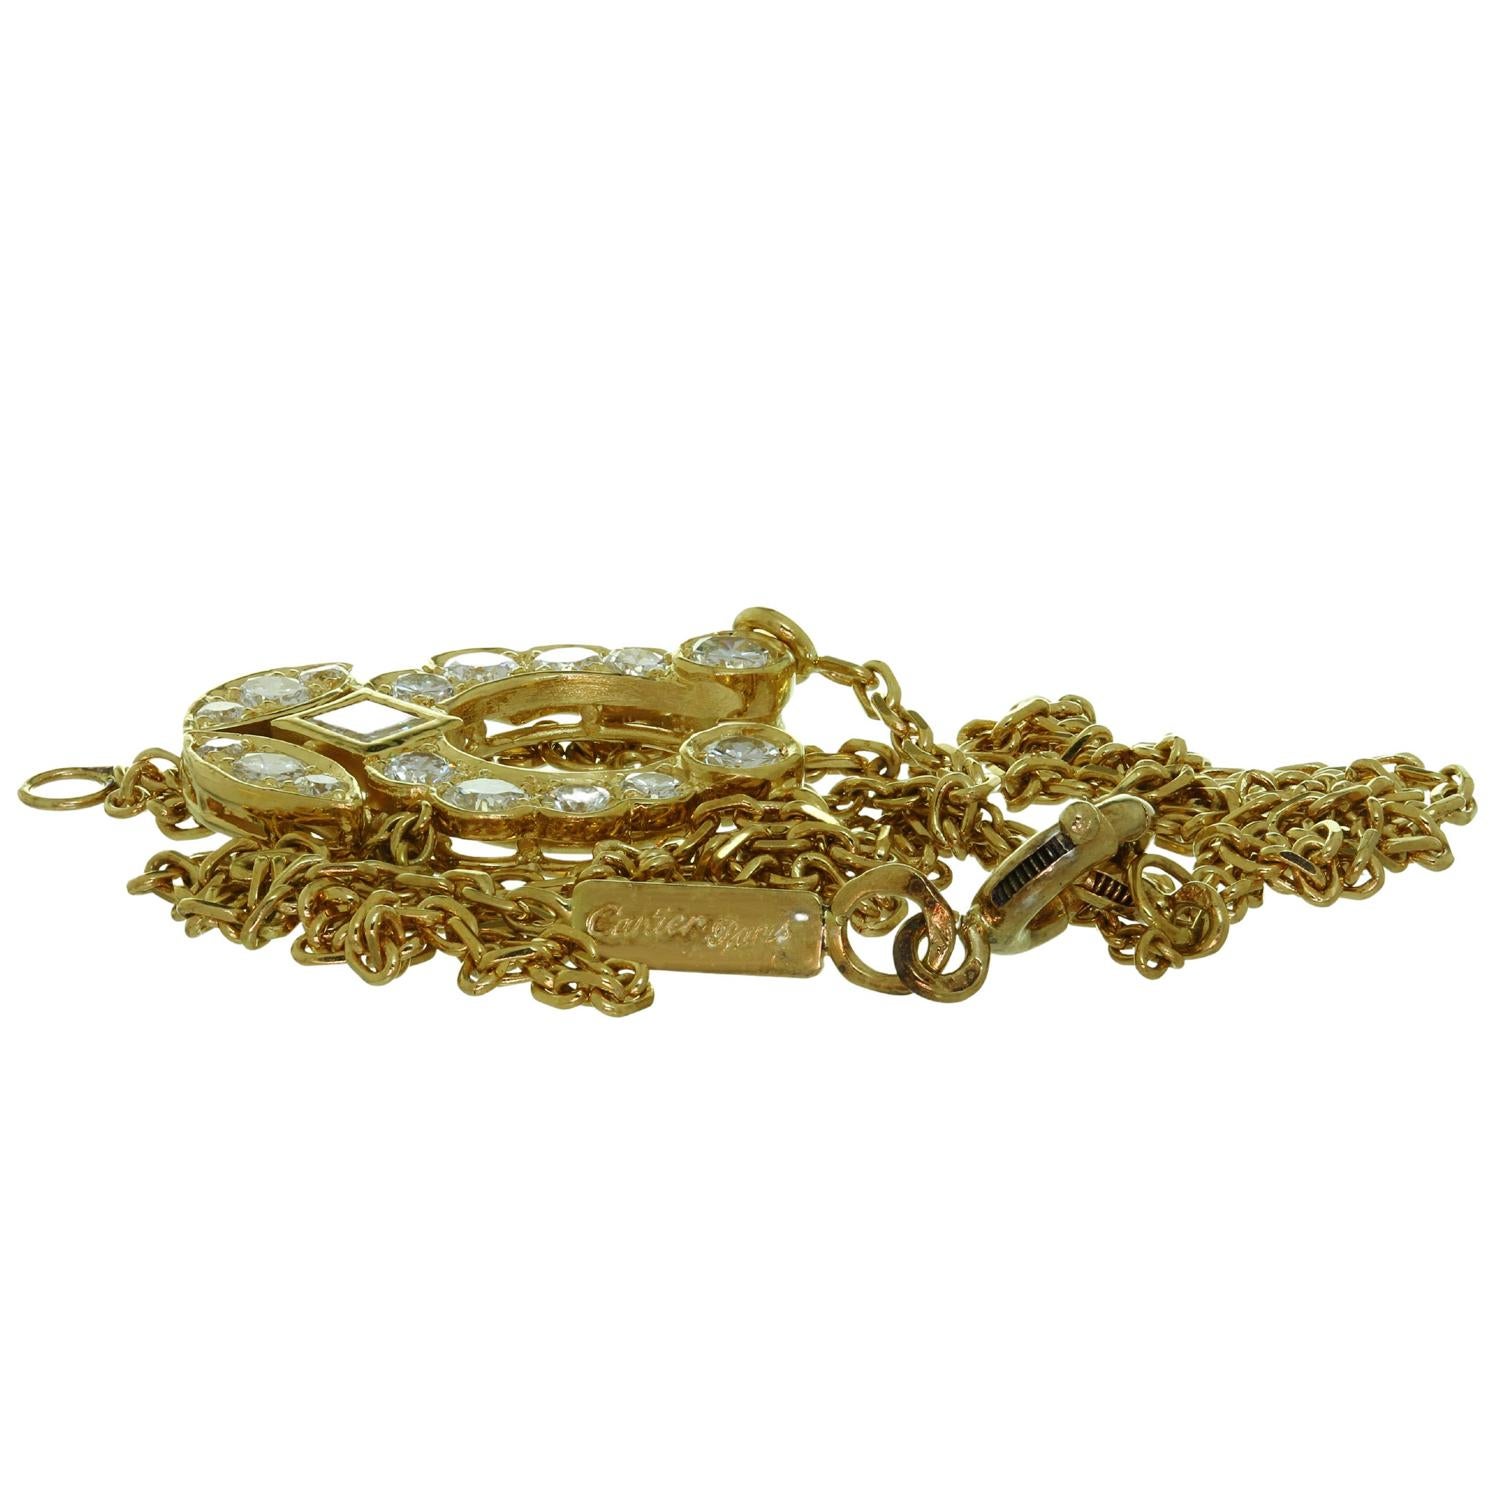 Brilliant Cut Cartier Diamond Yellow Gold Horseshoe Pendant Necklace